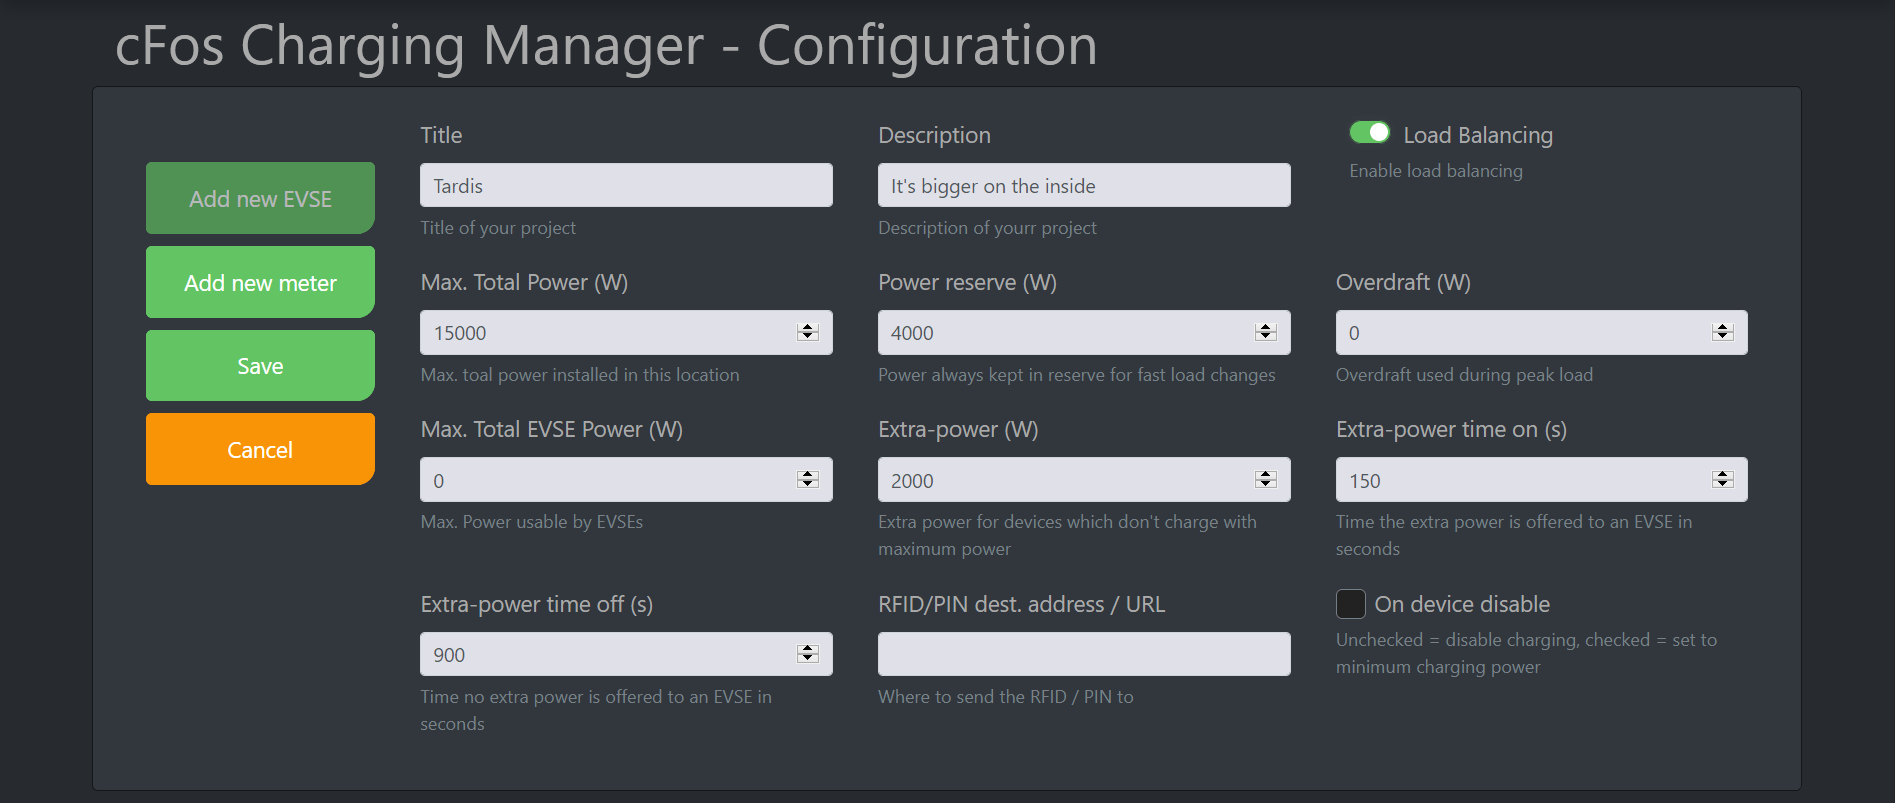 Screenshot #1 цФос Цхаргинг Манагер документација - конфигурацију